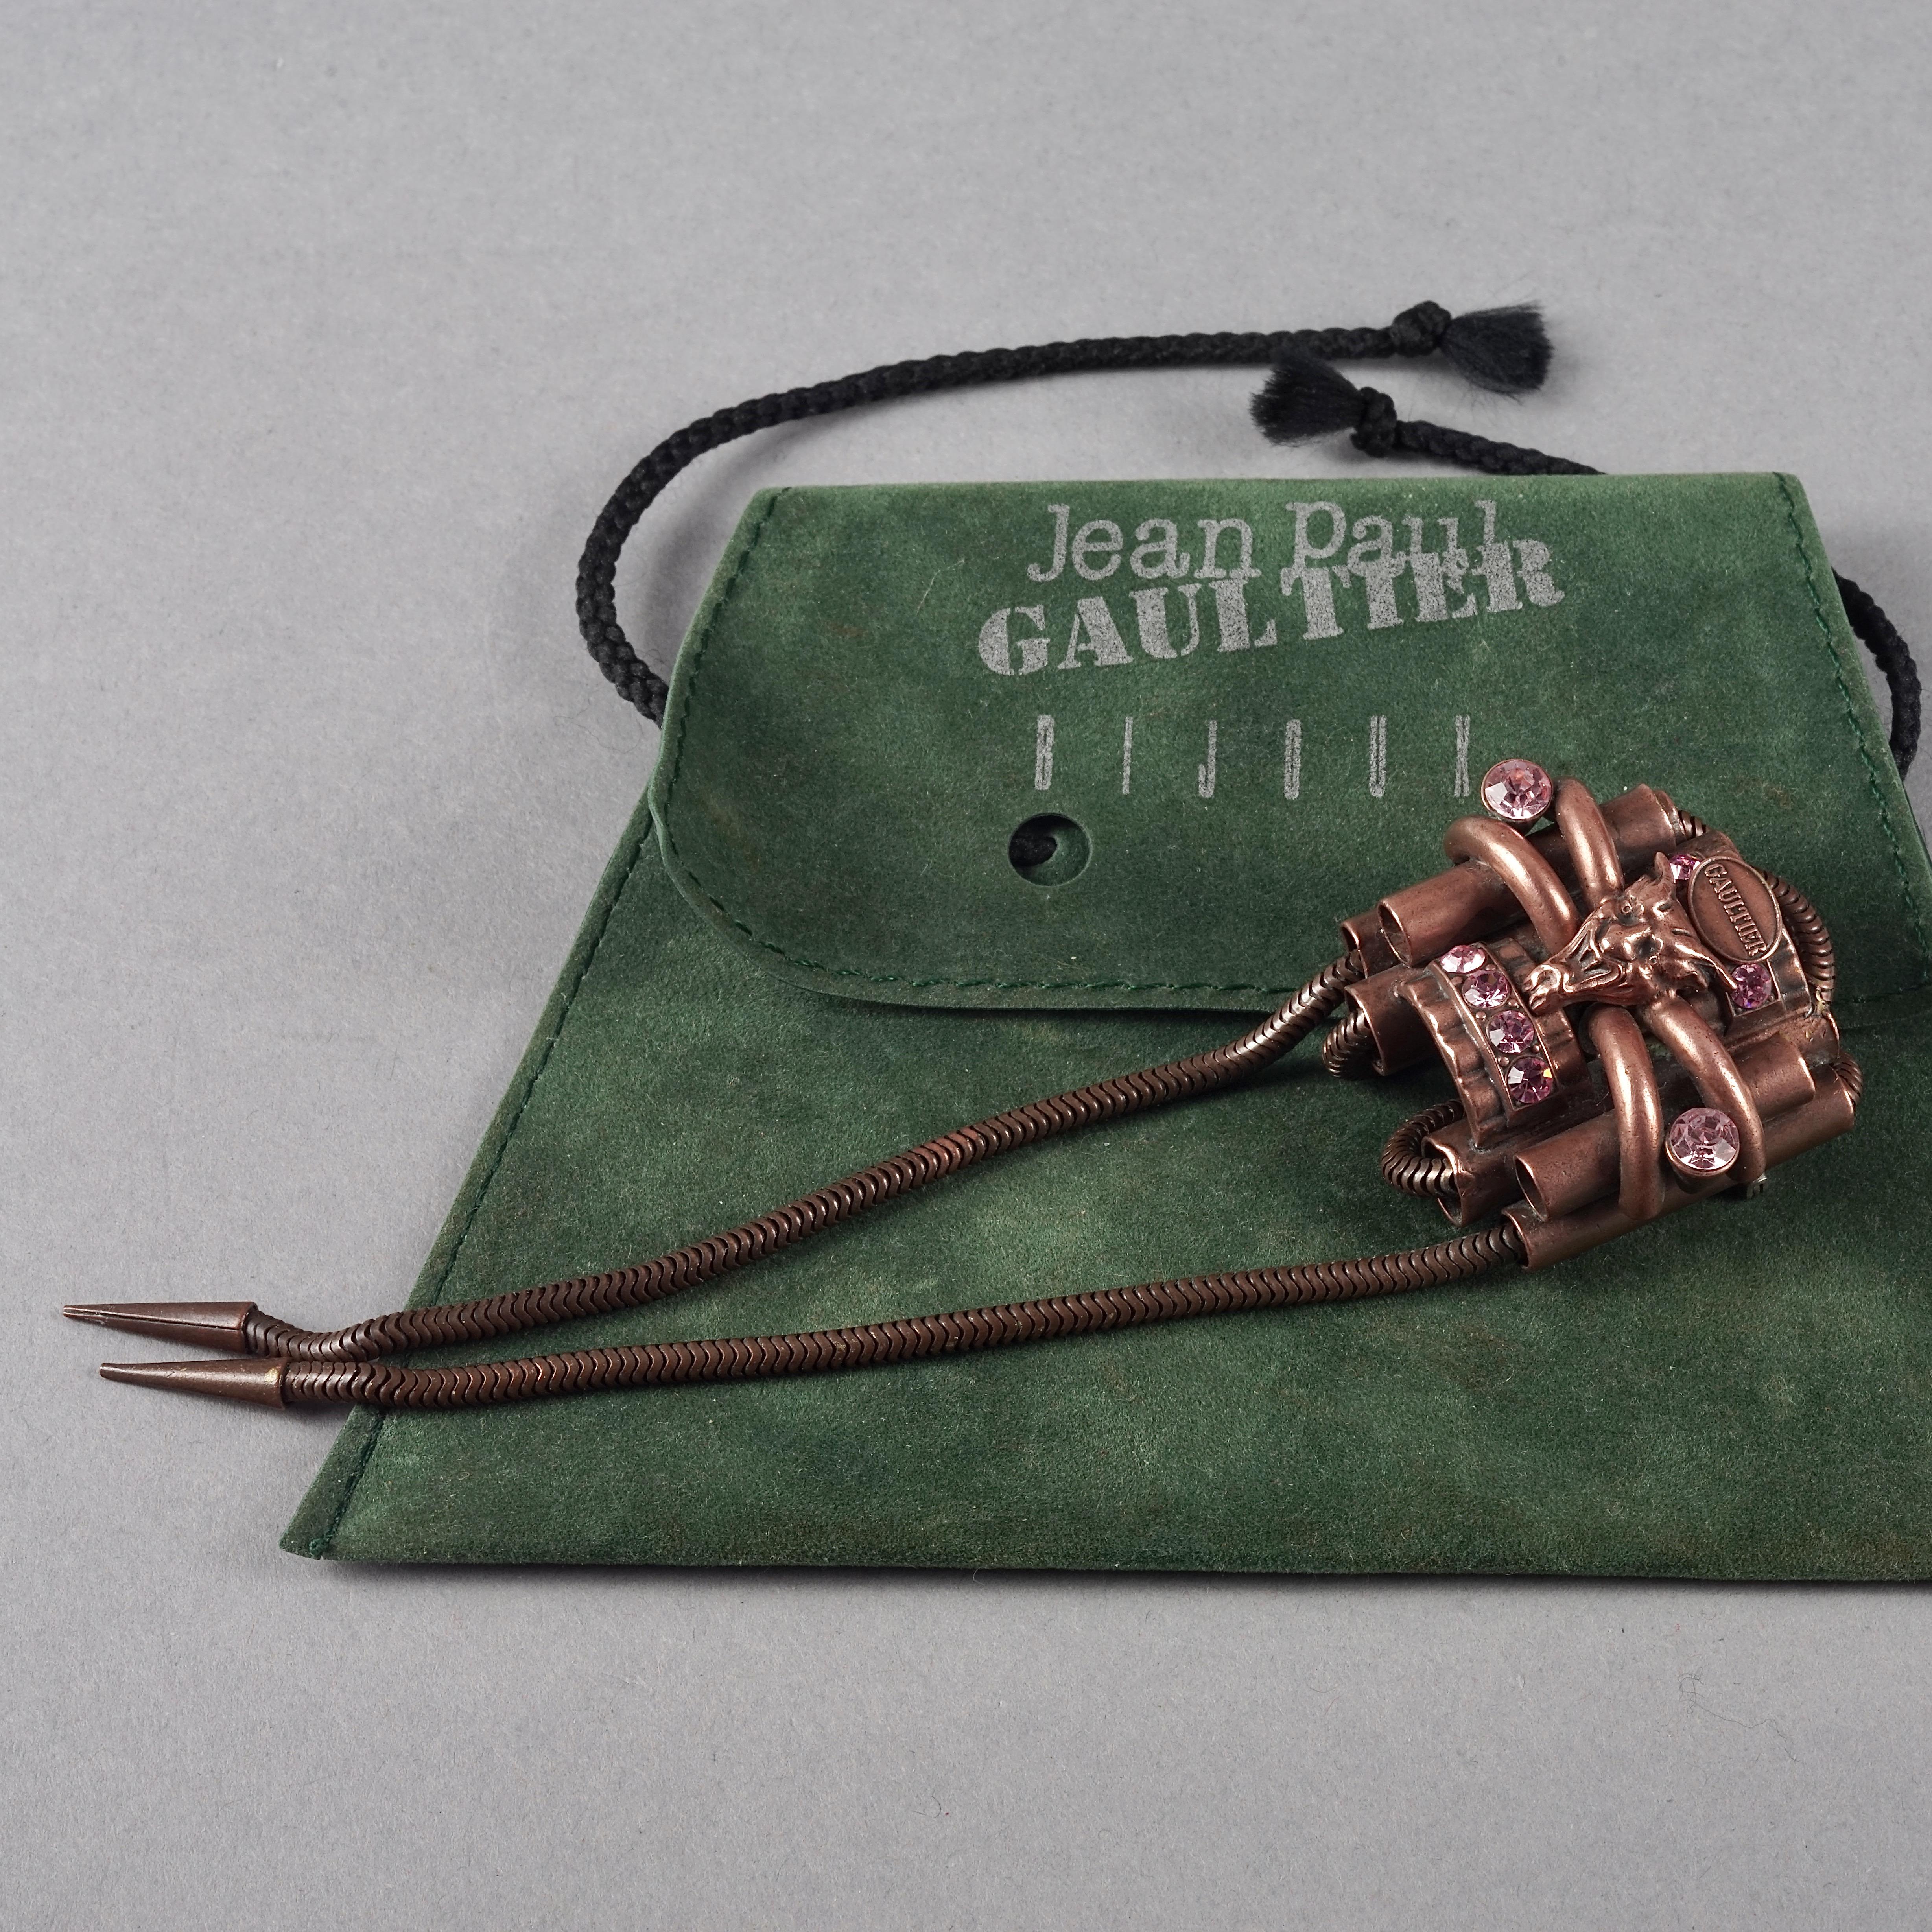 gaultier brooch